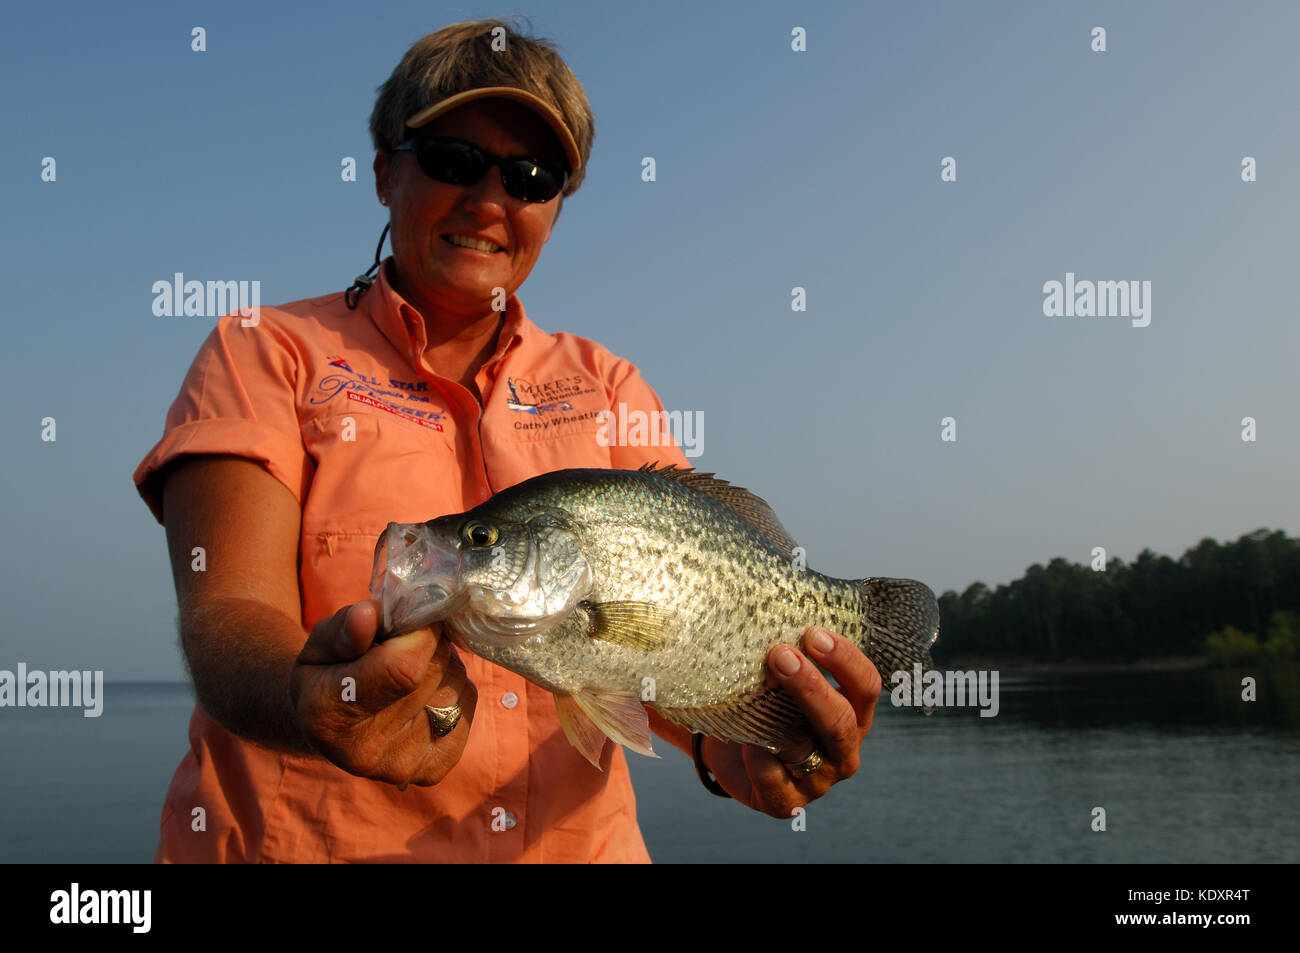 An angler holds a crappie fish caught on Lake Sam Rayburn near Jasper Texas Stock Photo